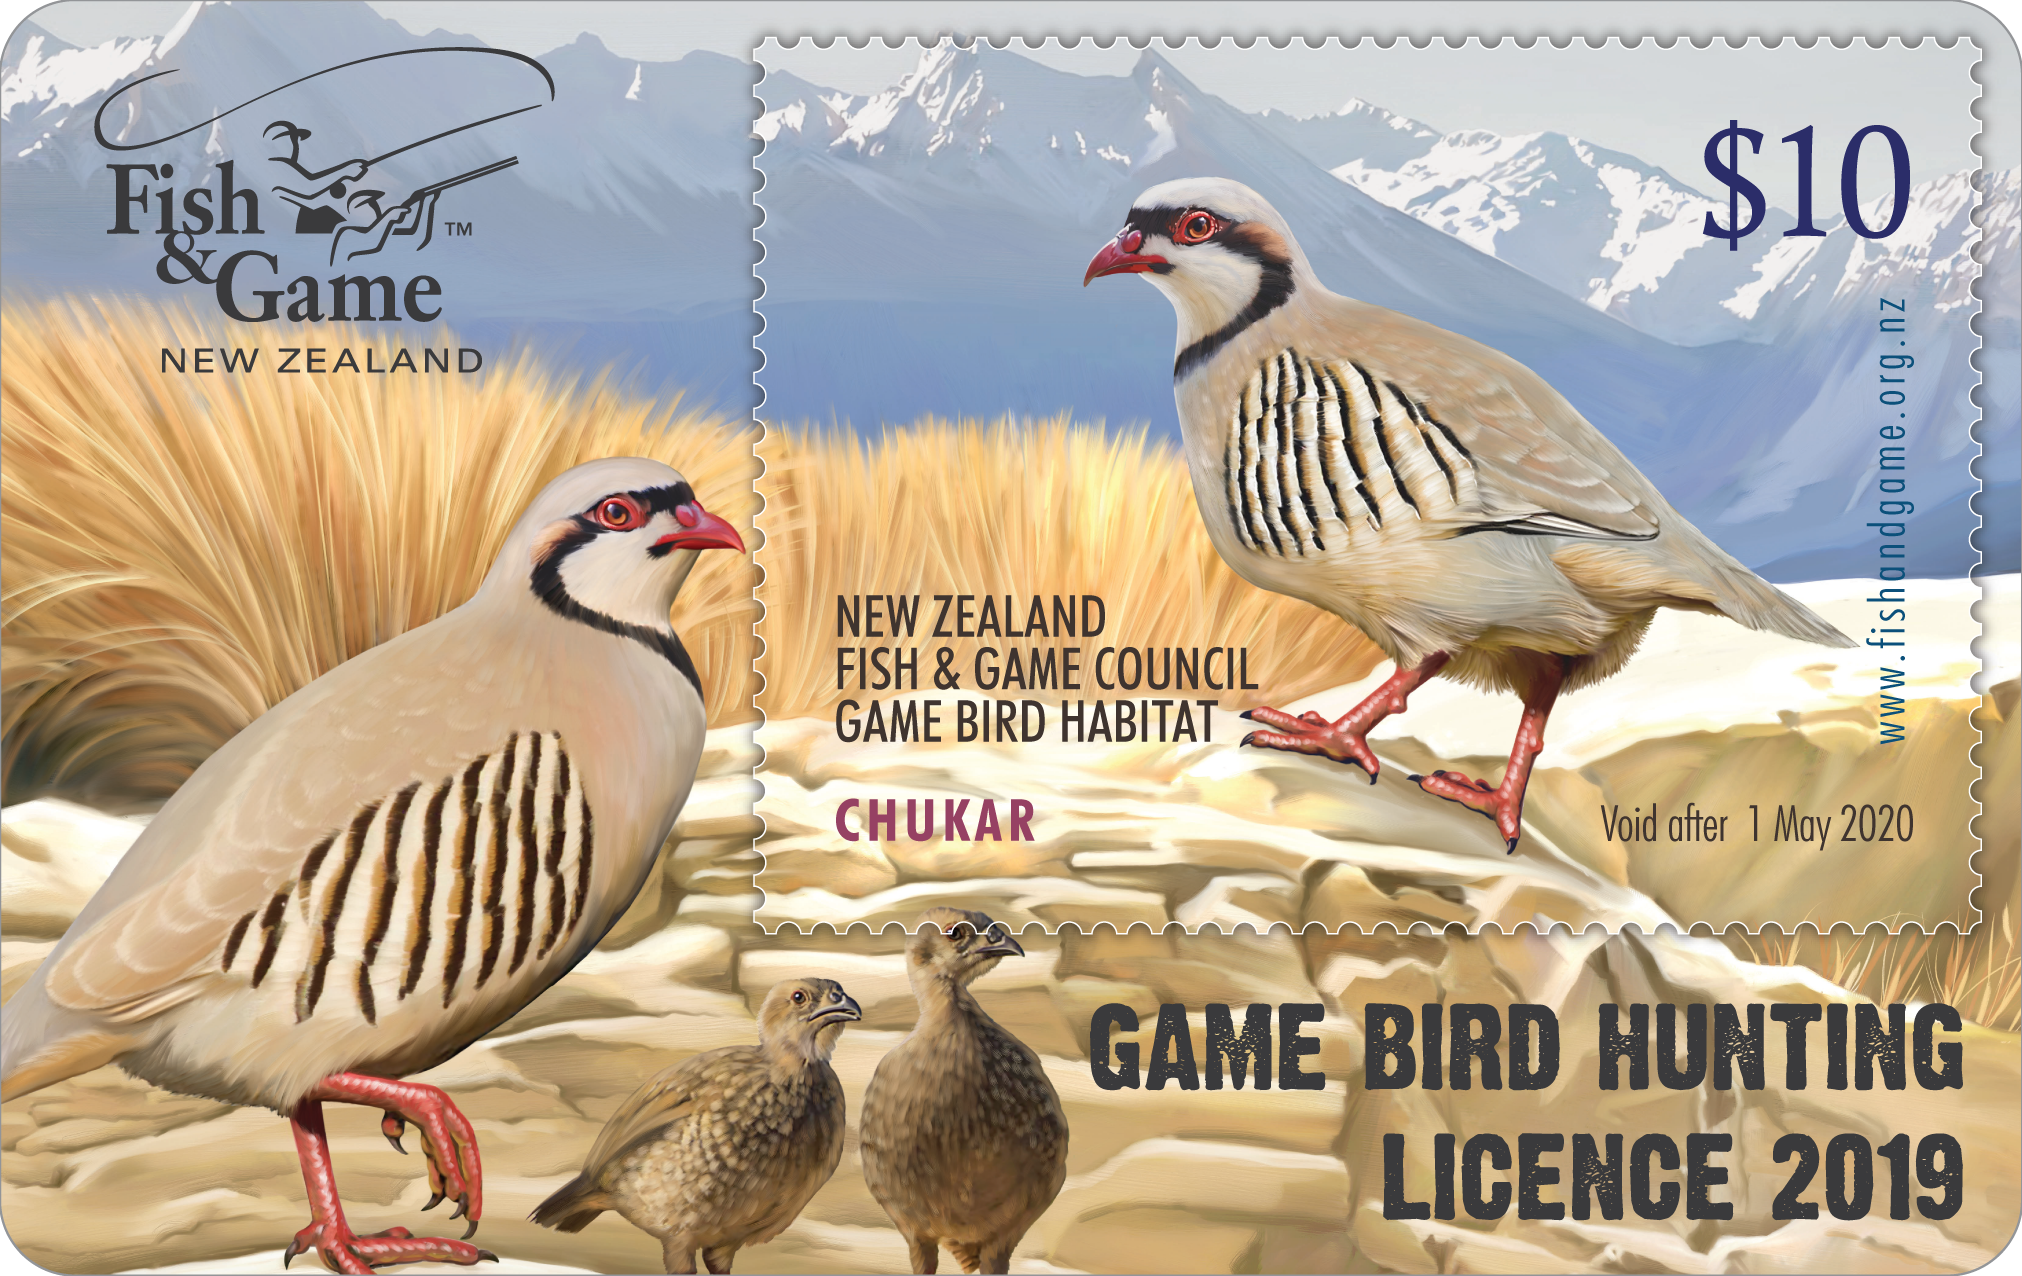 2019 Game Bird licence image10